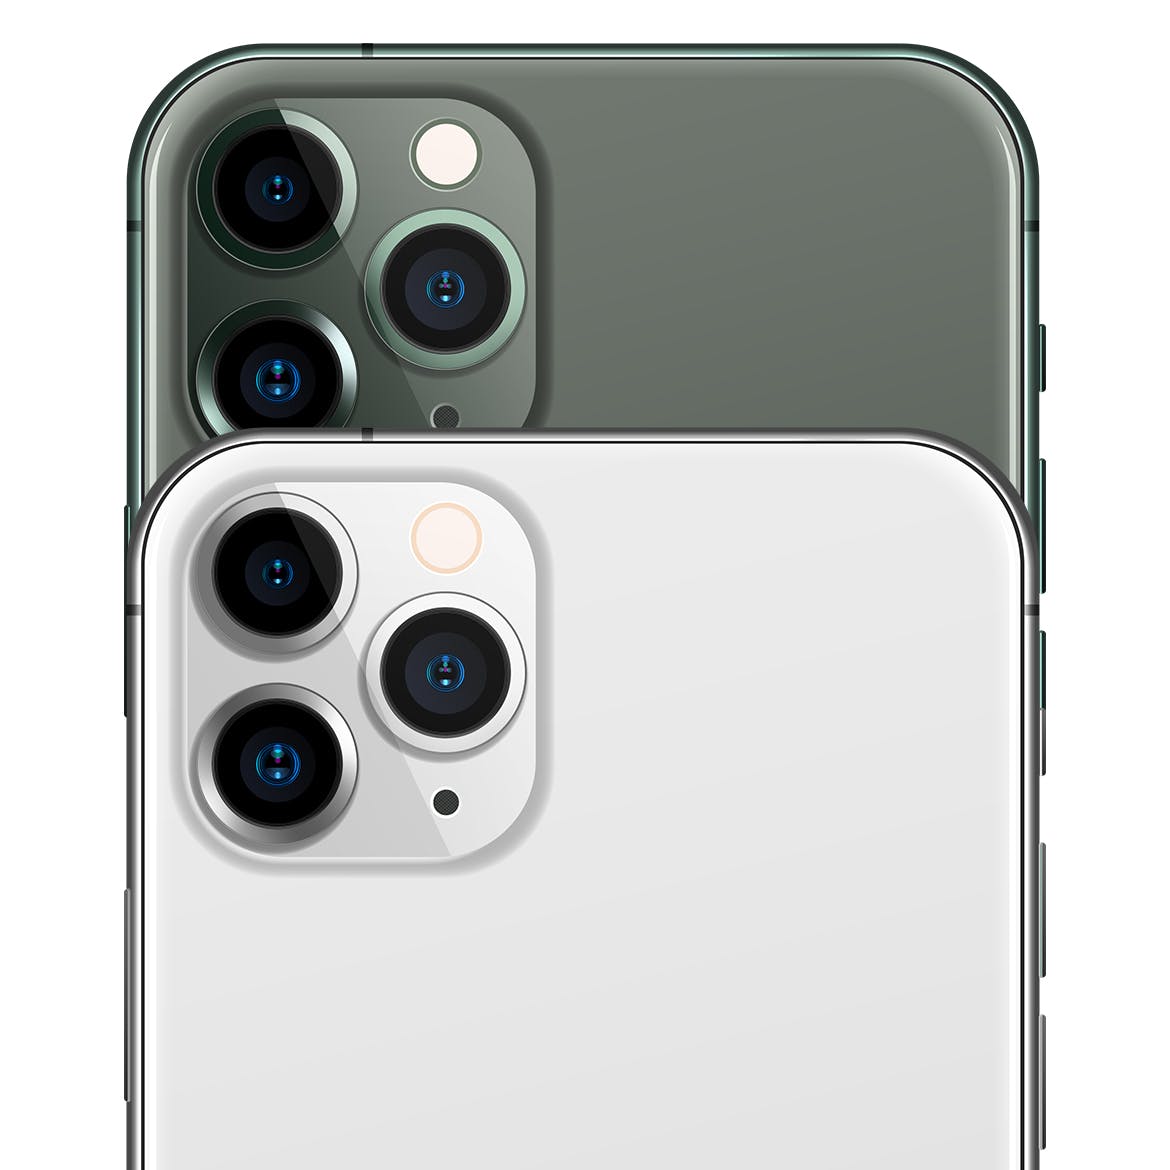 iPhone 11 Pro手机正/后视图样机模板 iPhone 11 Pro Layered PSD Face and Back Mock-ups插图(3)